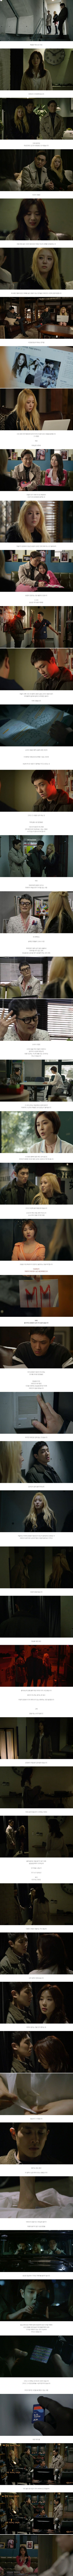 episode 4 captures for the Korean drama 'Vampire Detective'